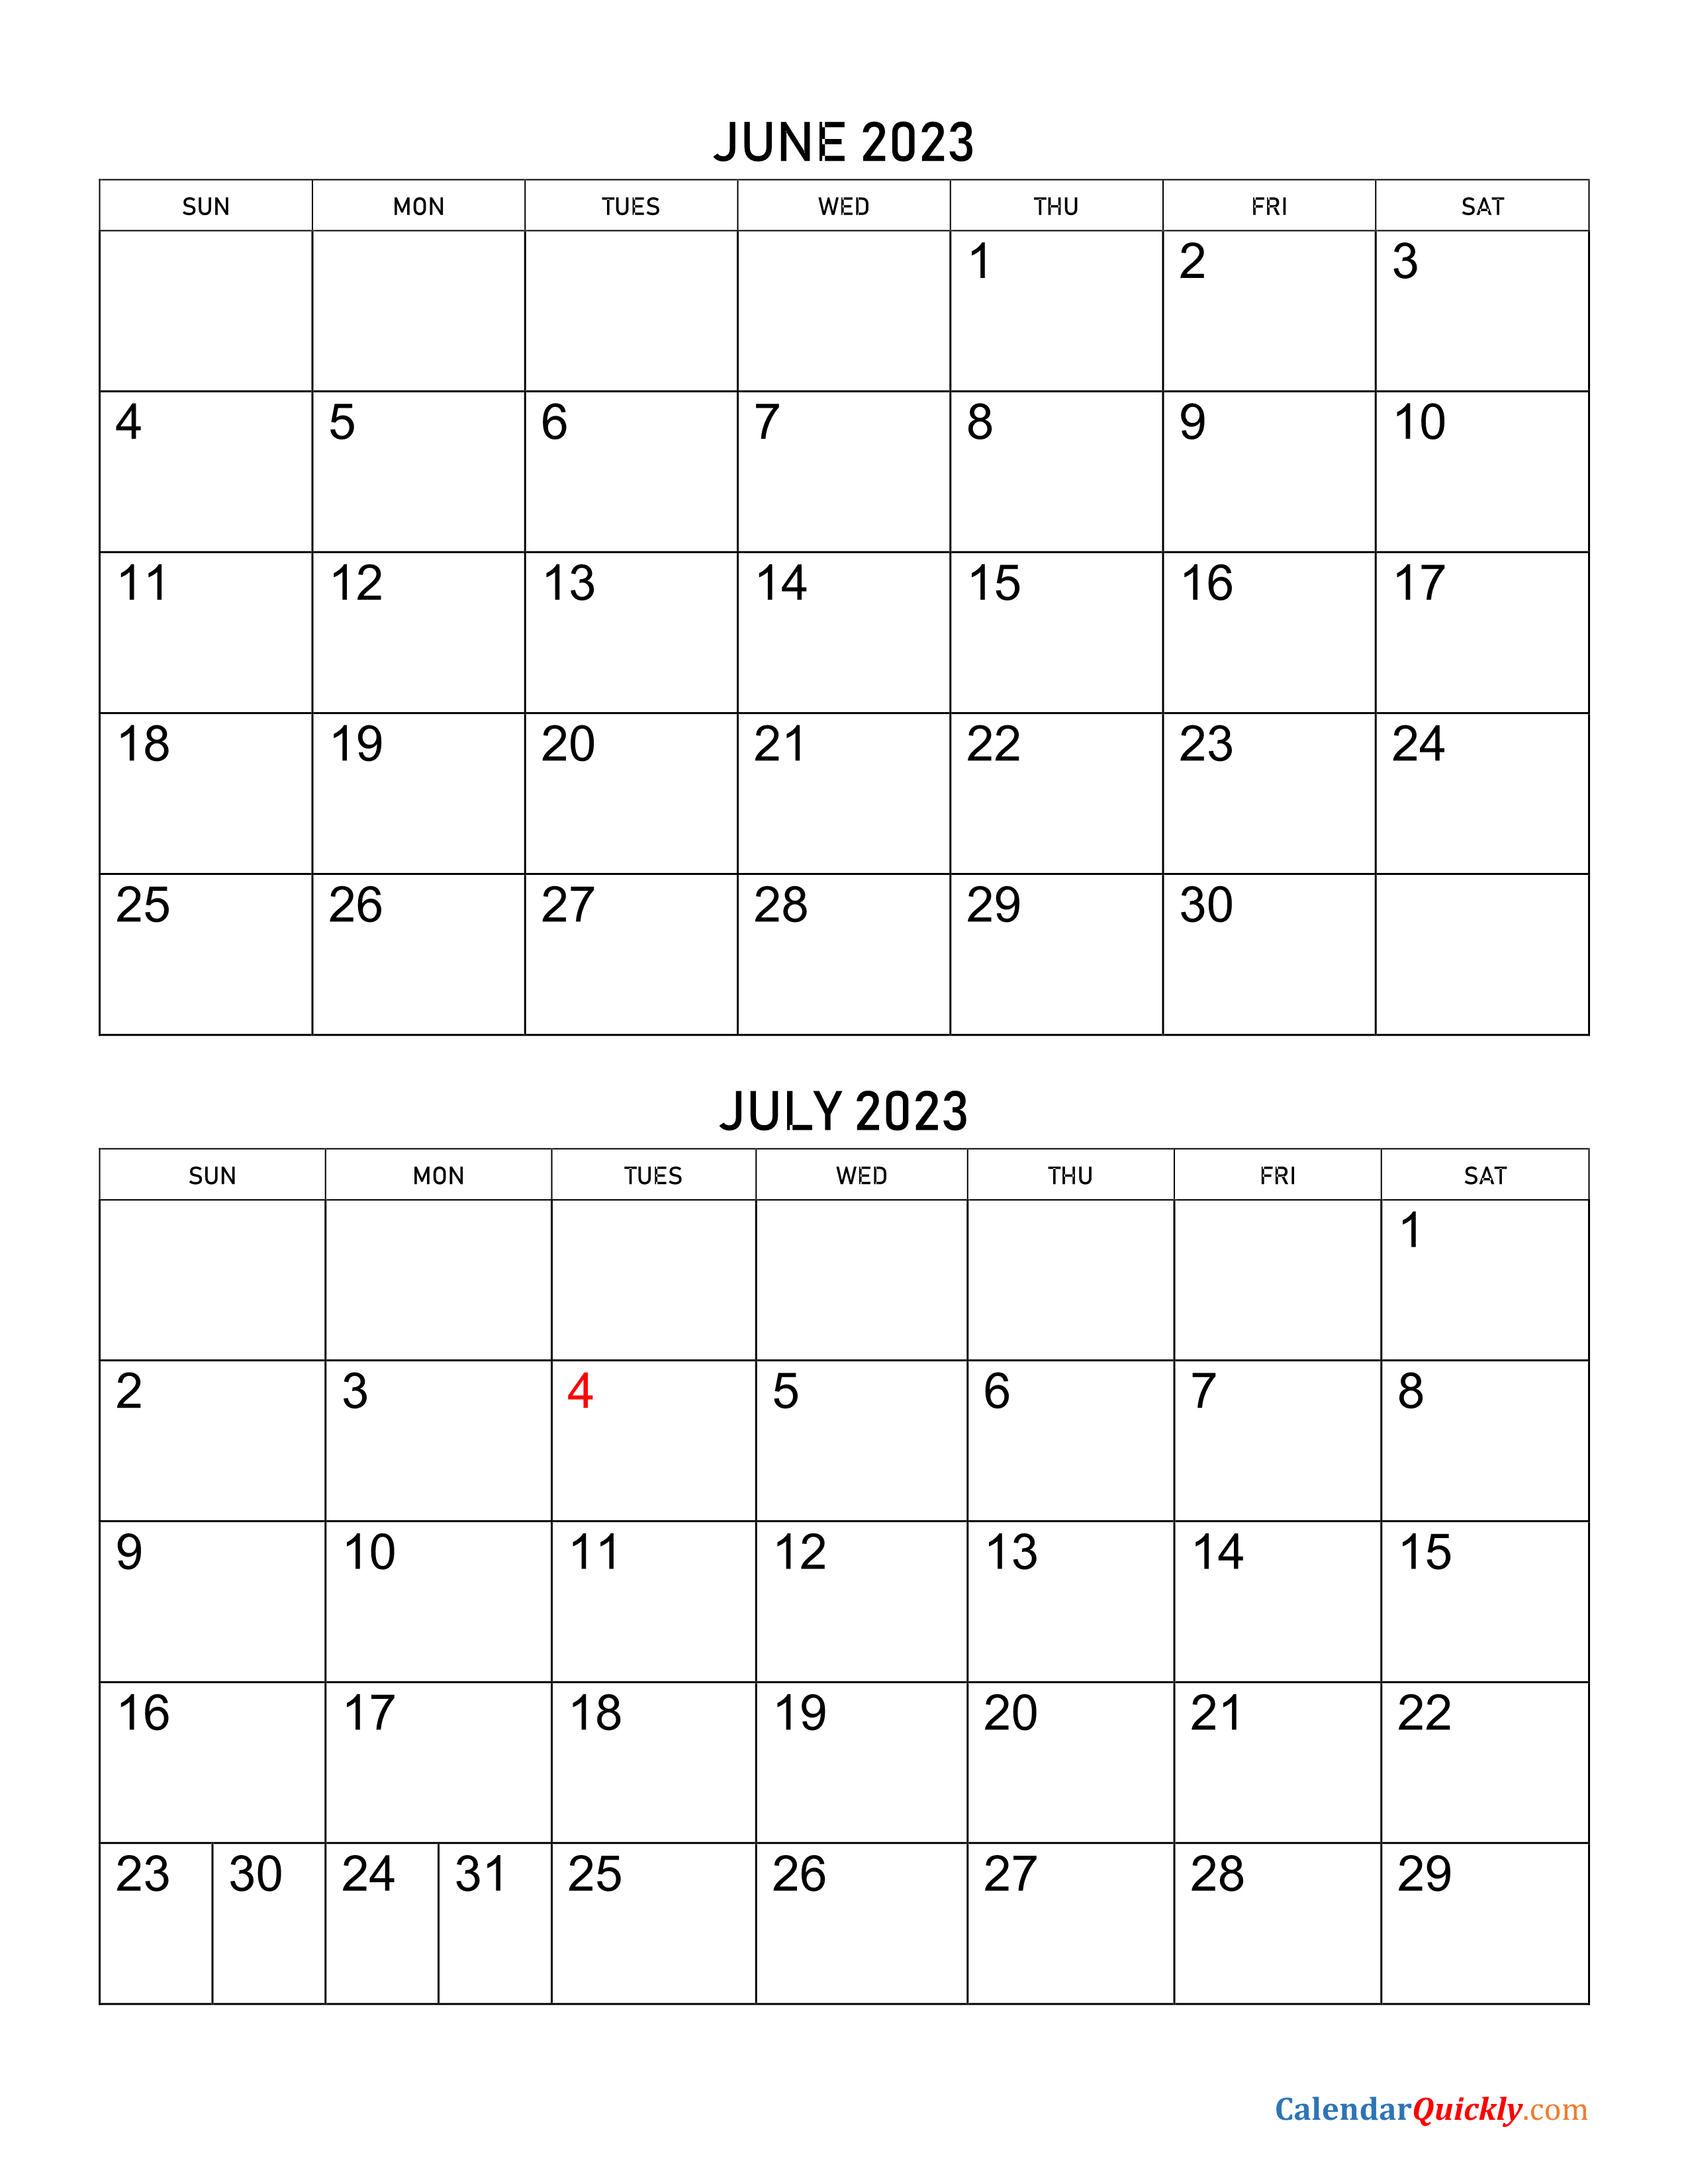 June and July 2023 Calendar | Calendar Quickly